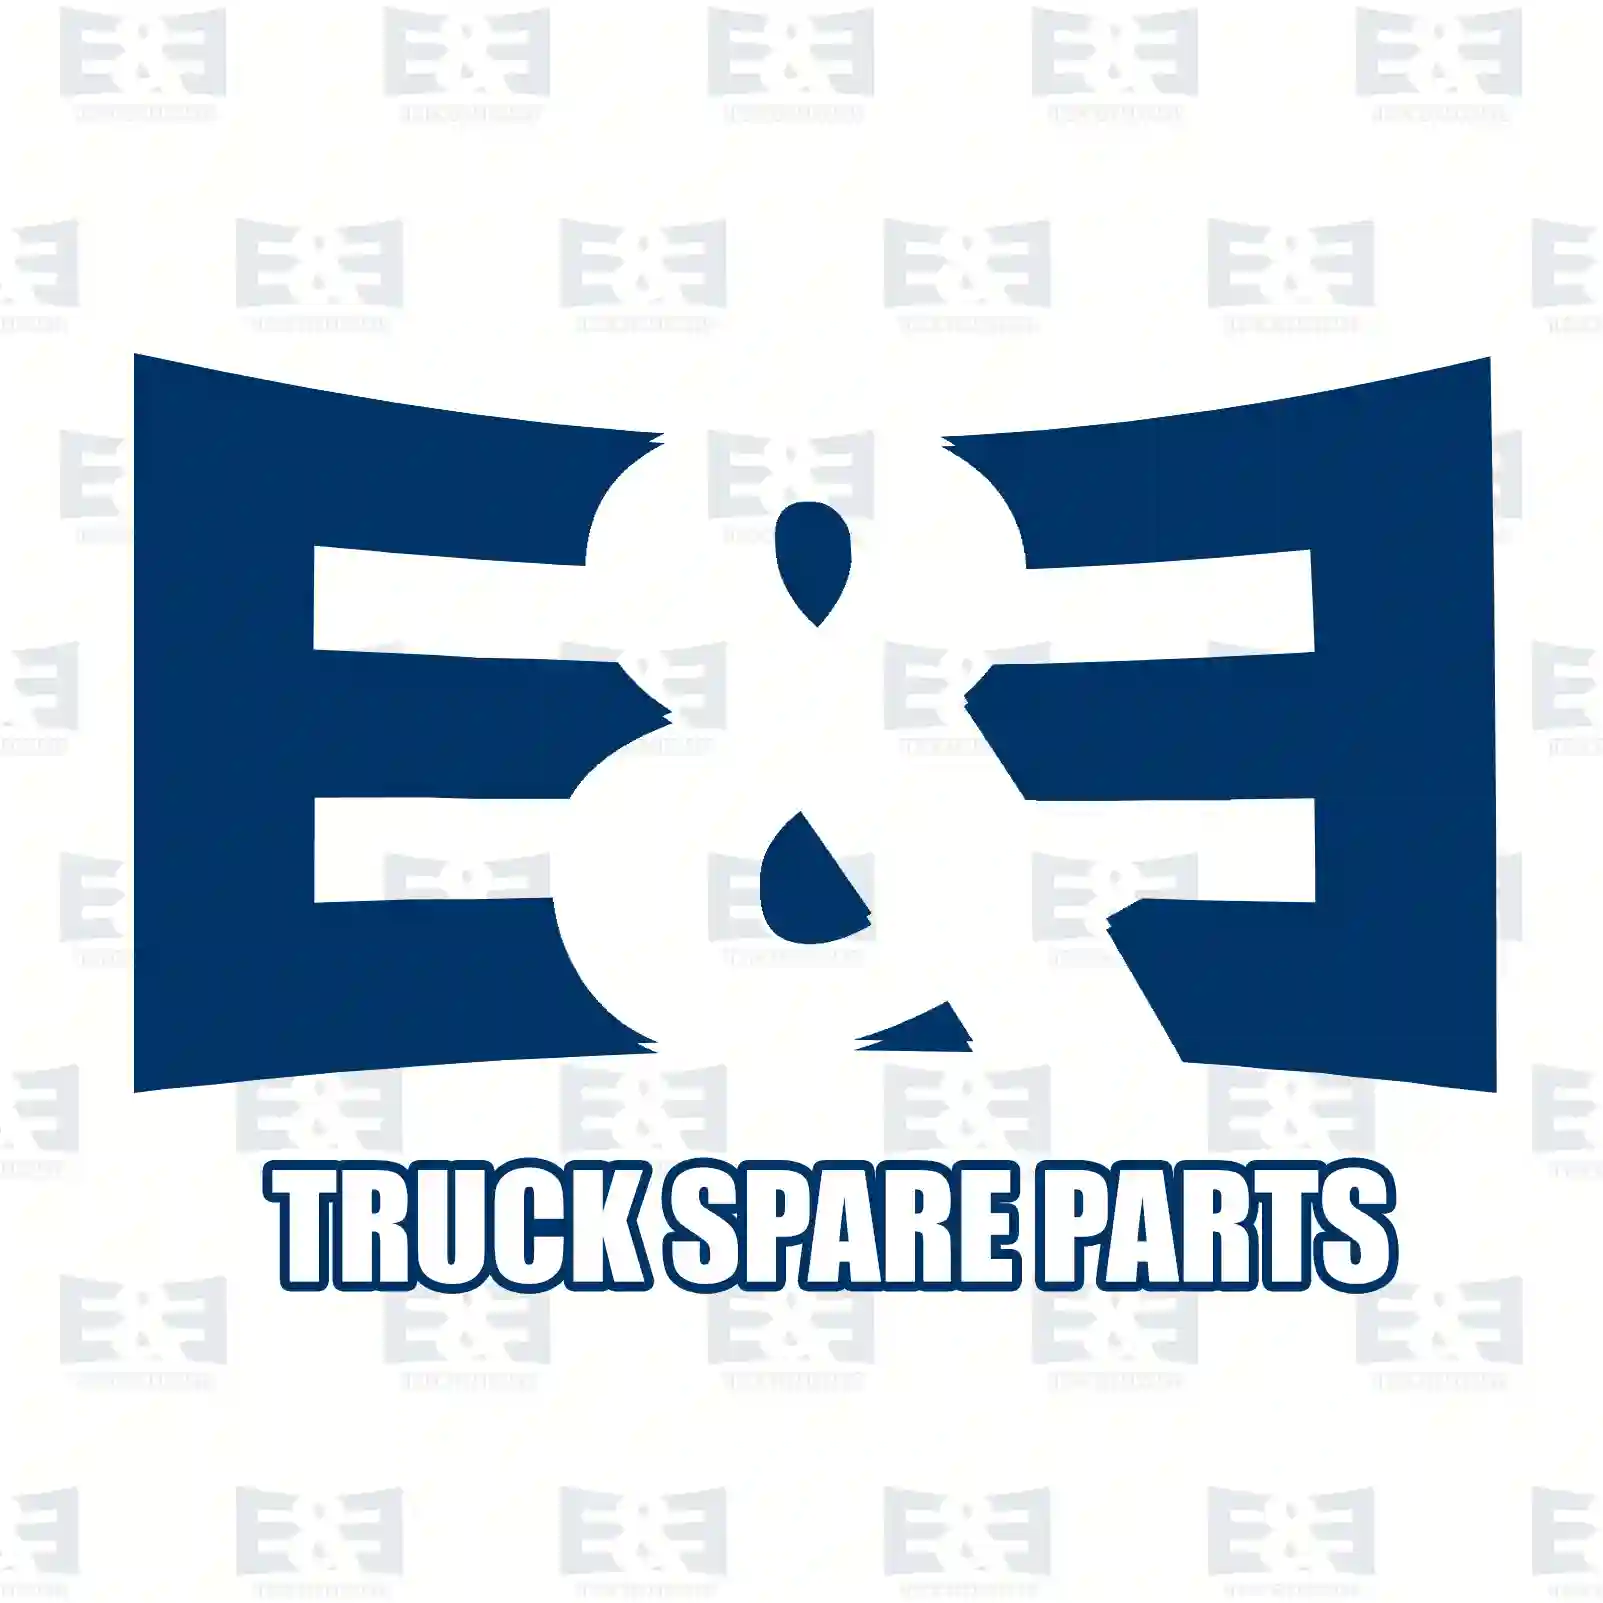 Disc brake pad kit, 2E2297450, BBU8177, BBU8178, 01903486, 01906026, 01906049, 01906070, 01906344, 08124302, 1903486, 1906026, 1906049, 1906070 ||  2E2297450 E&E Truck Spare Parts | Truck Spare Parts, Auotomotive Spare Parts Disc brake pad kit, 2E2297450, BBU8177, BBU8178, 01903486, 01906026, 01906049, 01906070, 01906344, 08124302, 1903486, 1906026, 1906049, 1906070 ||  2E2297450 E&E Truck Spare Parts | Truck Spare Parts, Auotomotive Spare Parts